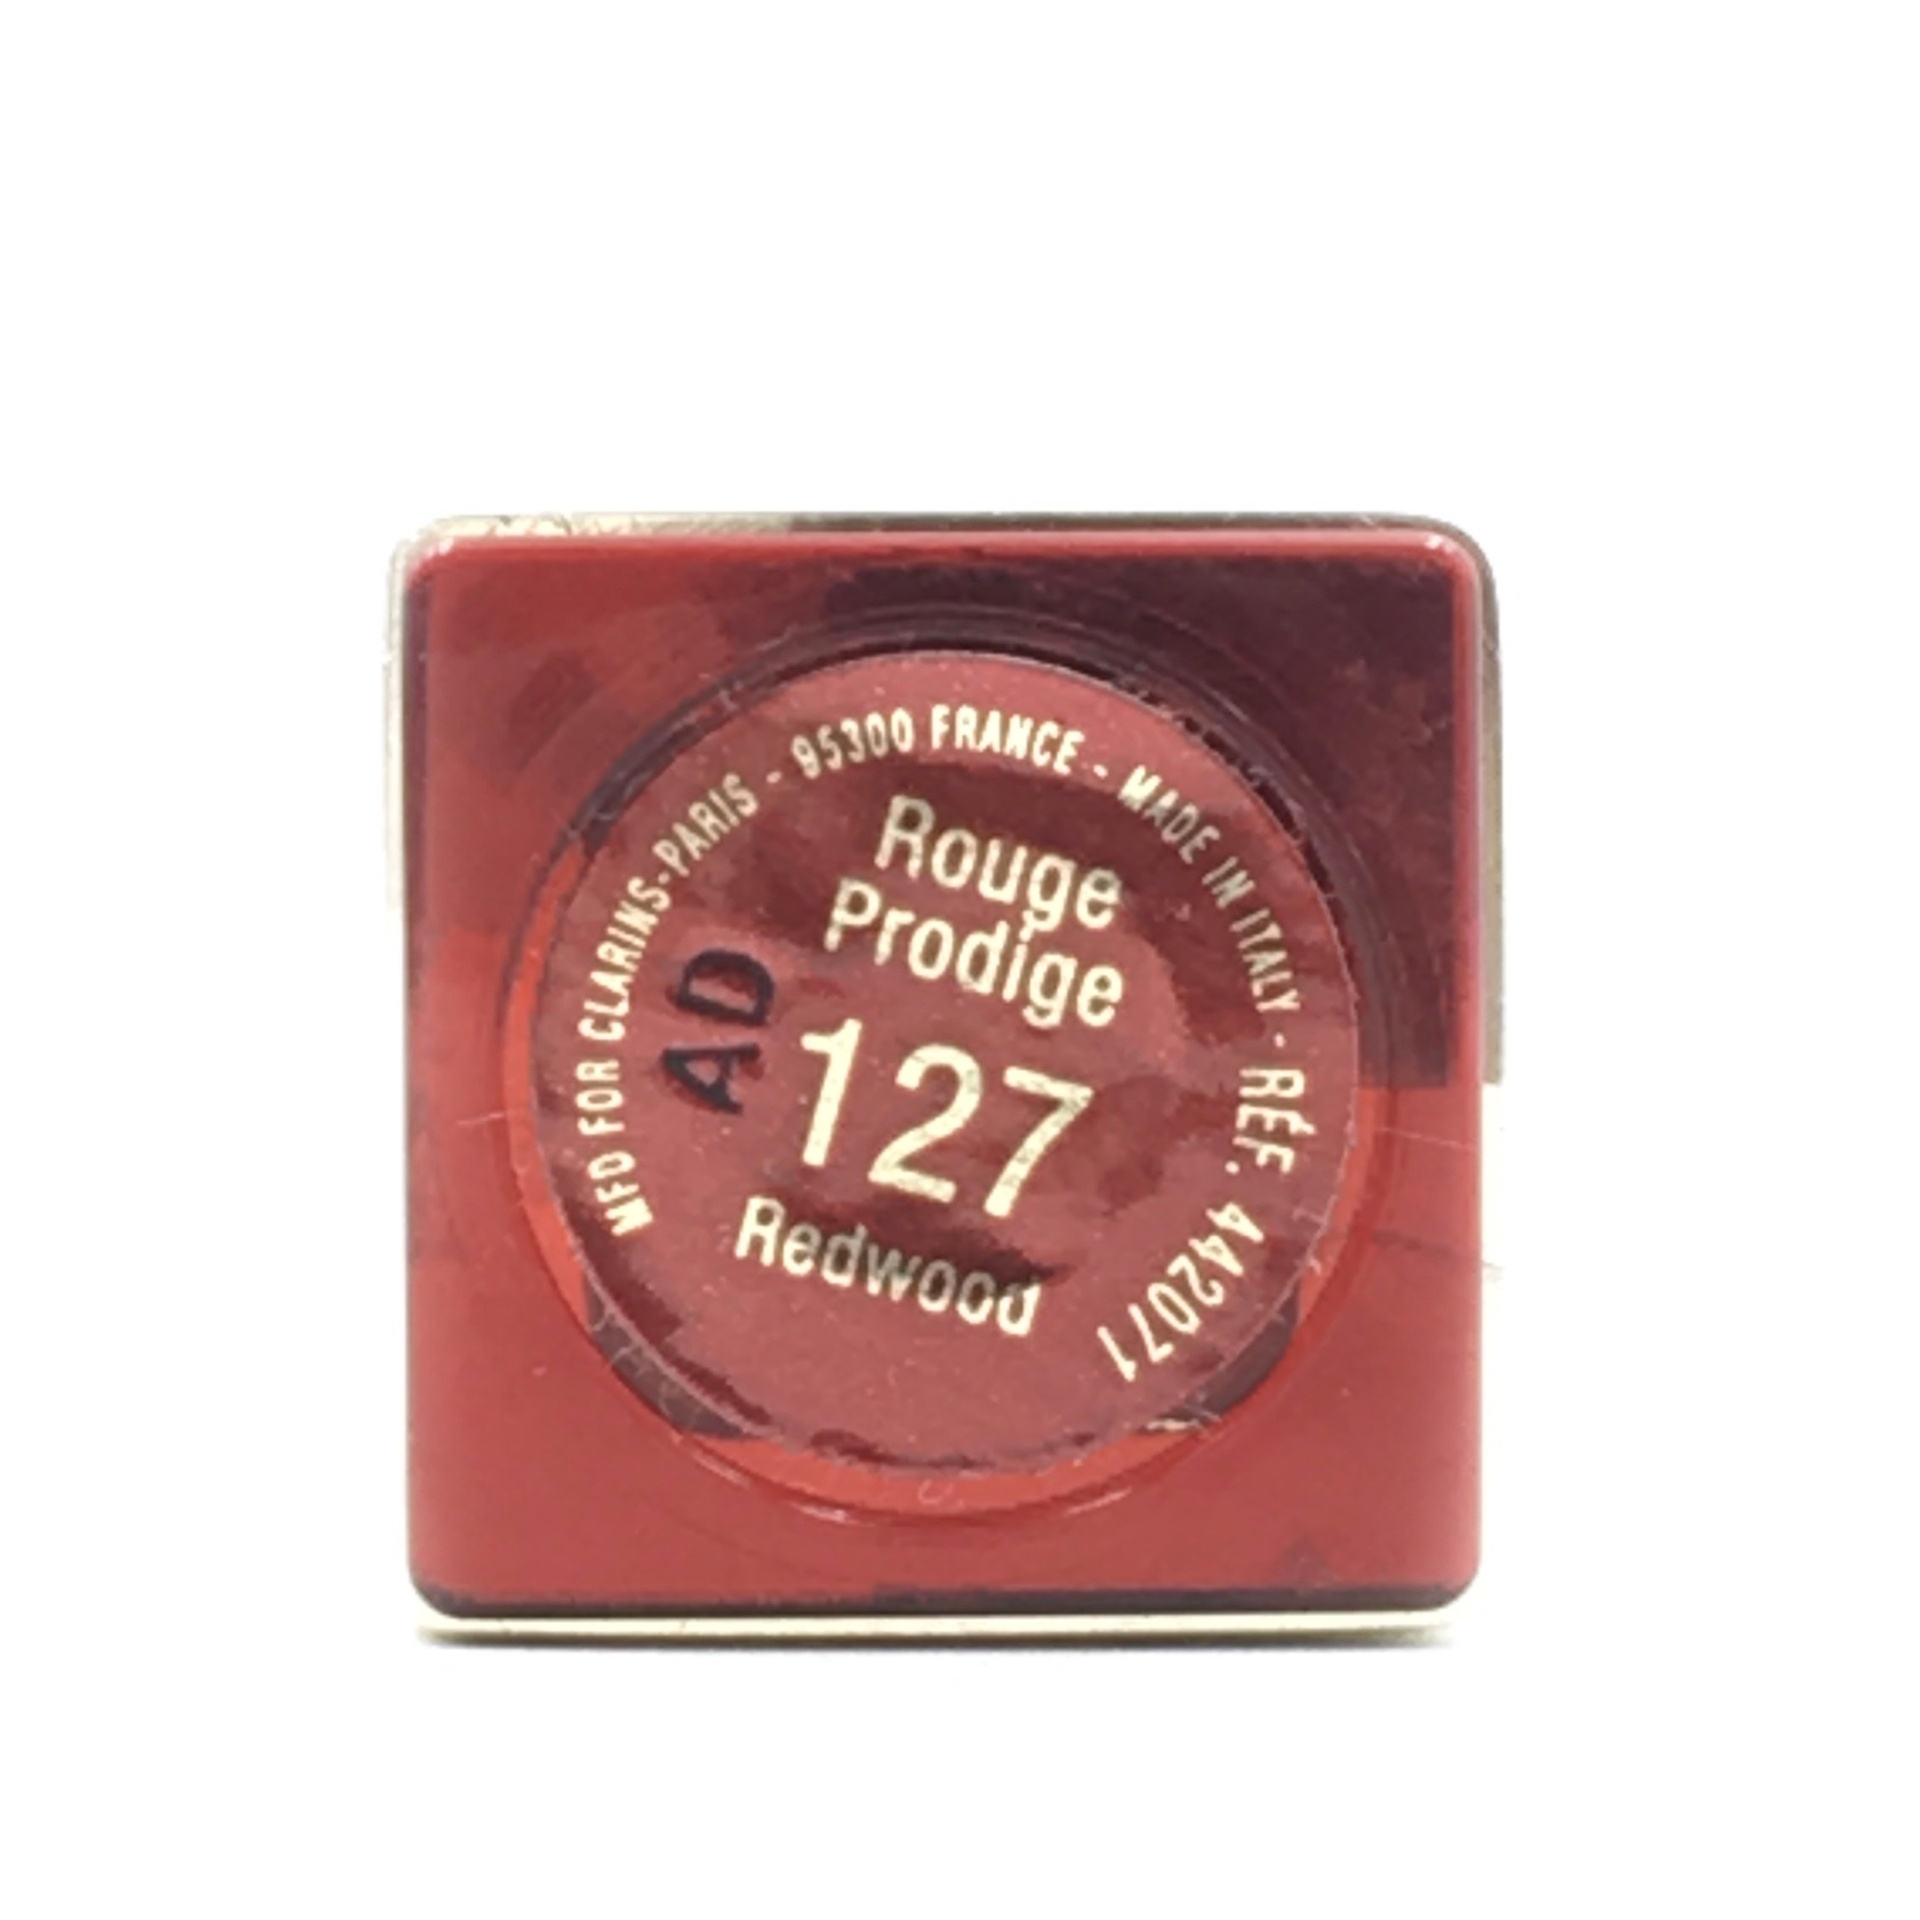 Clarins Rouge Prodige 127 Redwood Lipstick